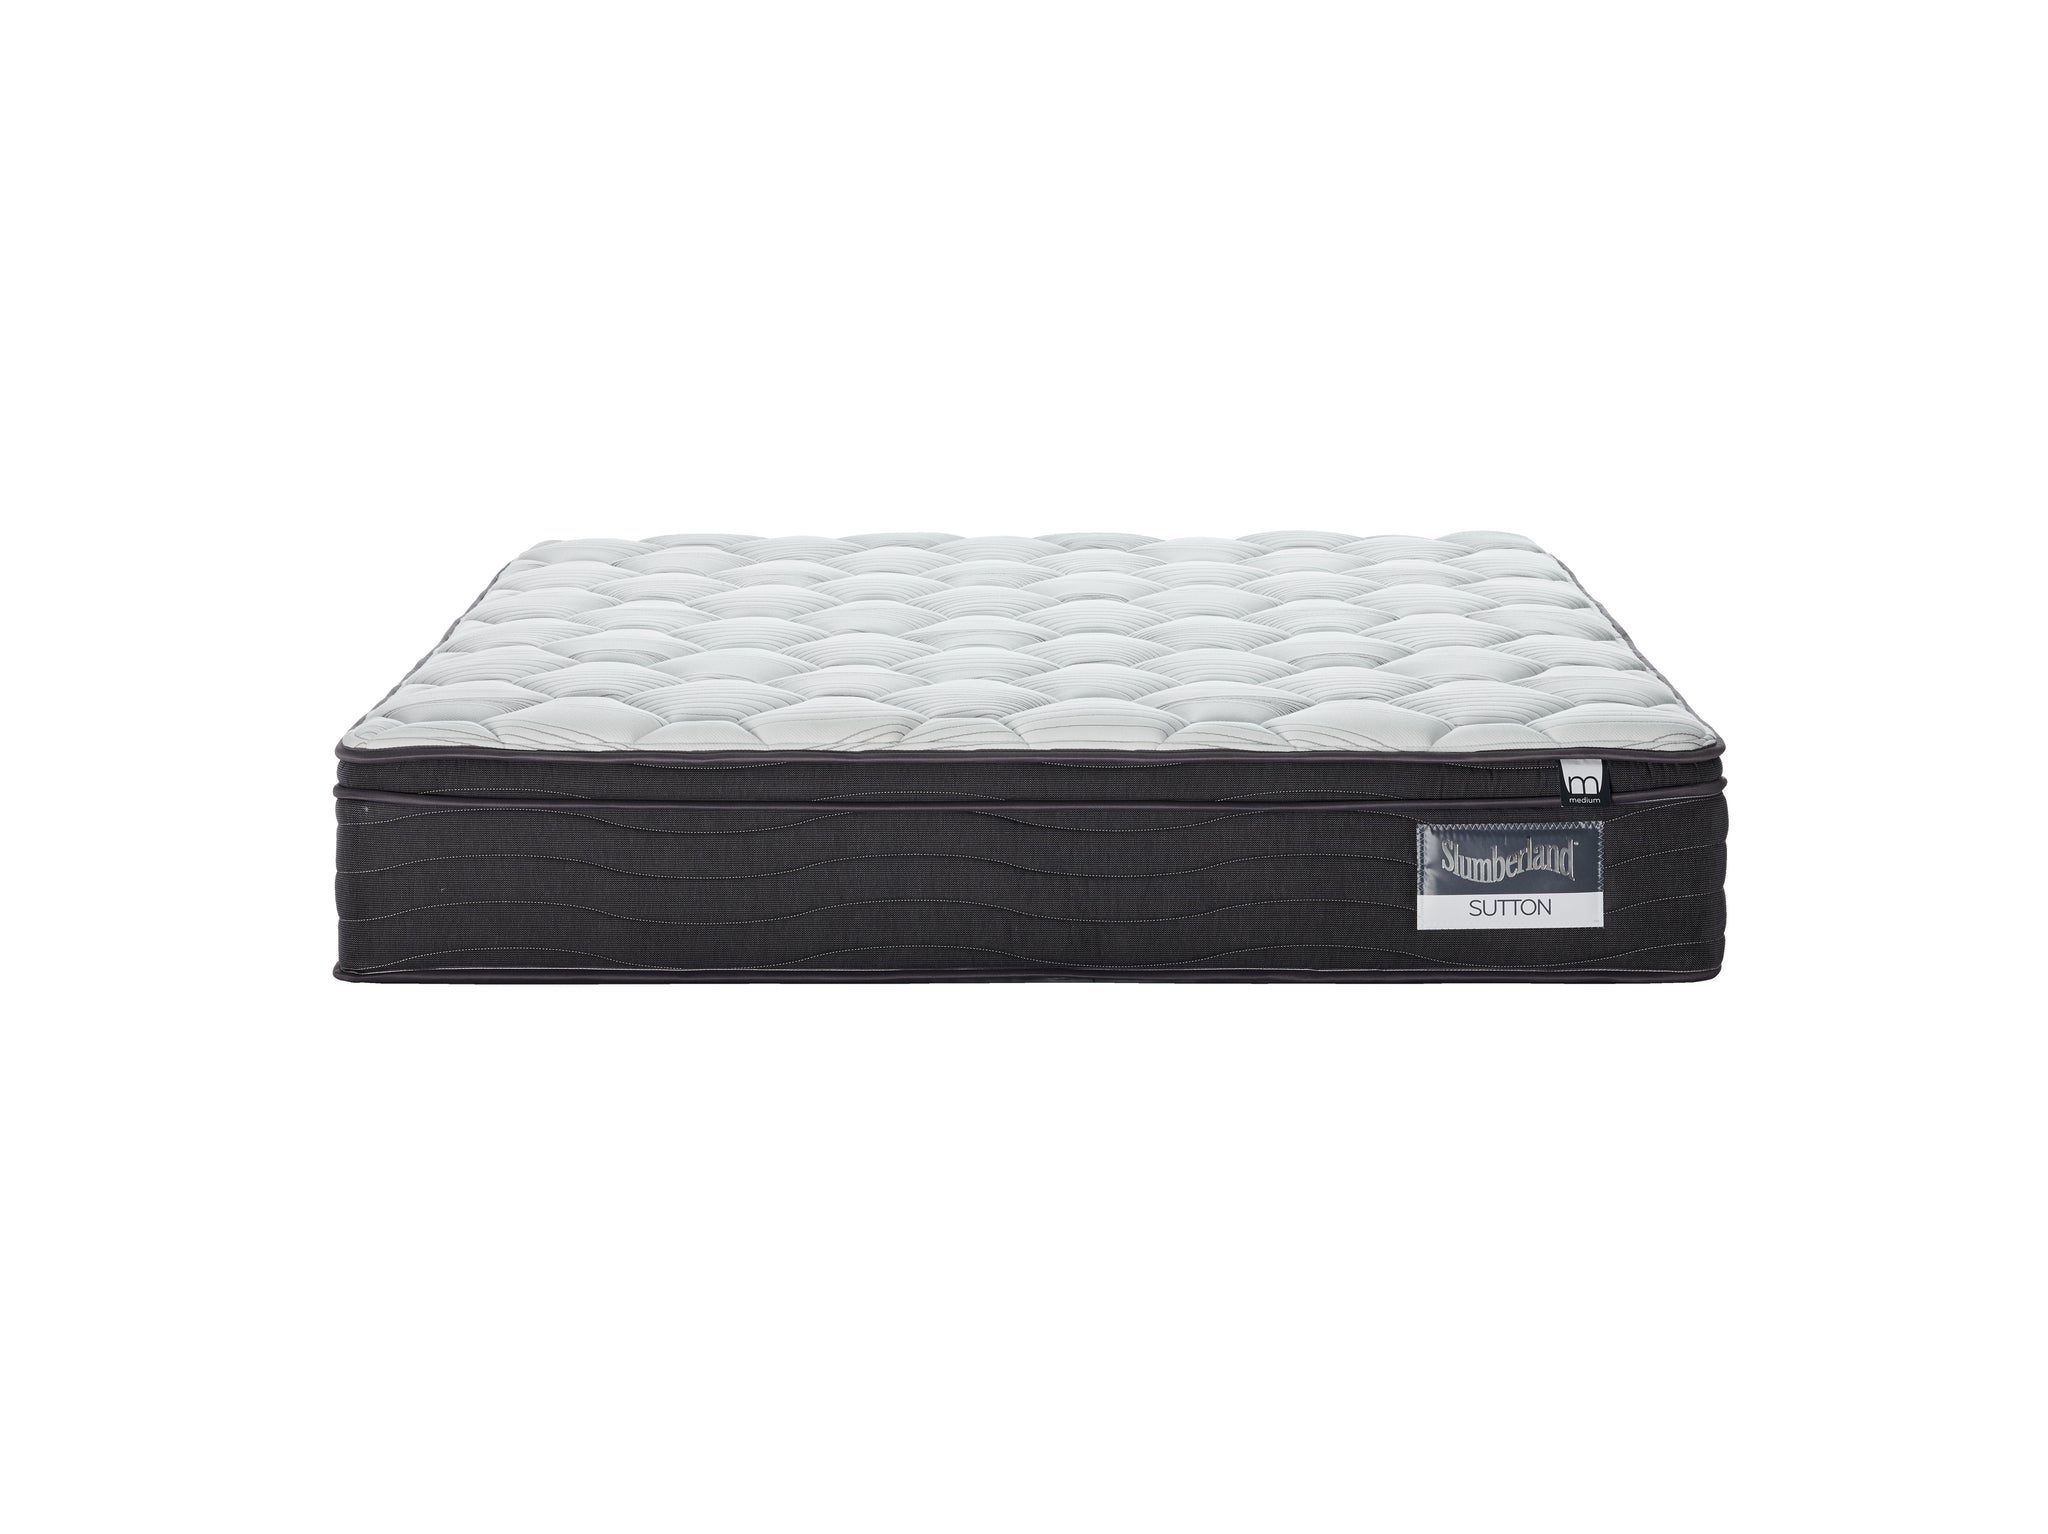 slumberland devon queen mattress review